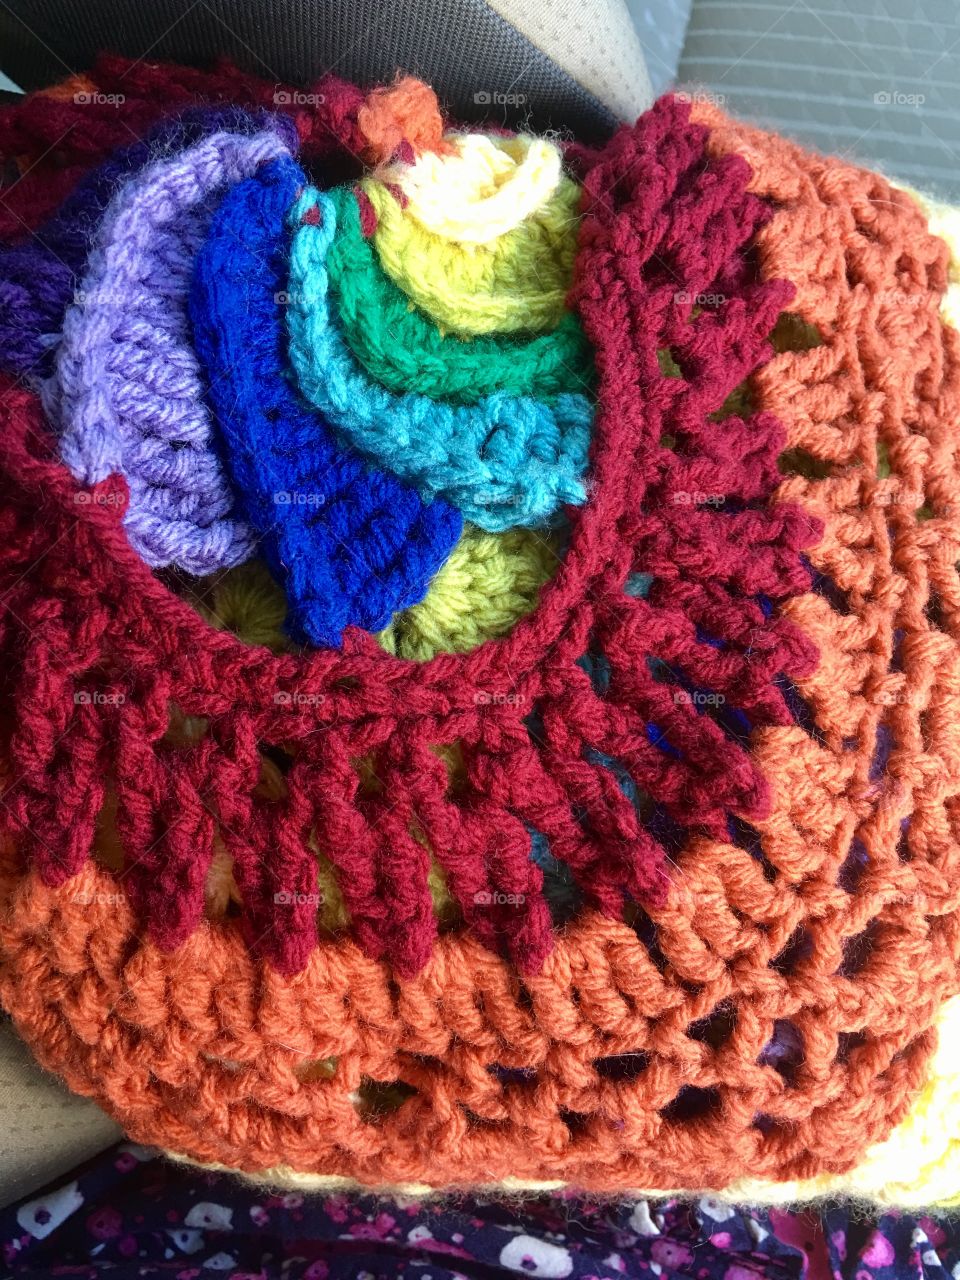 Rainbow wrap handmade with yarn